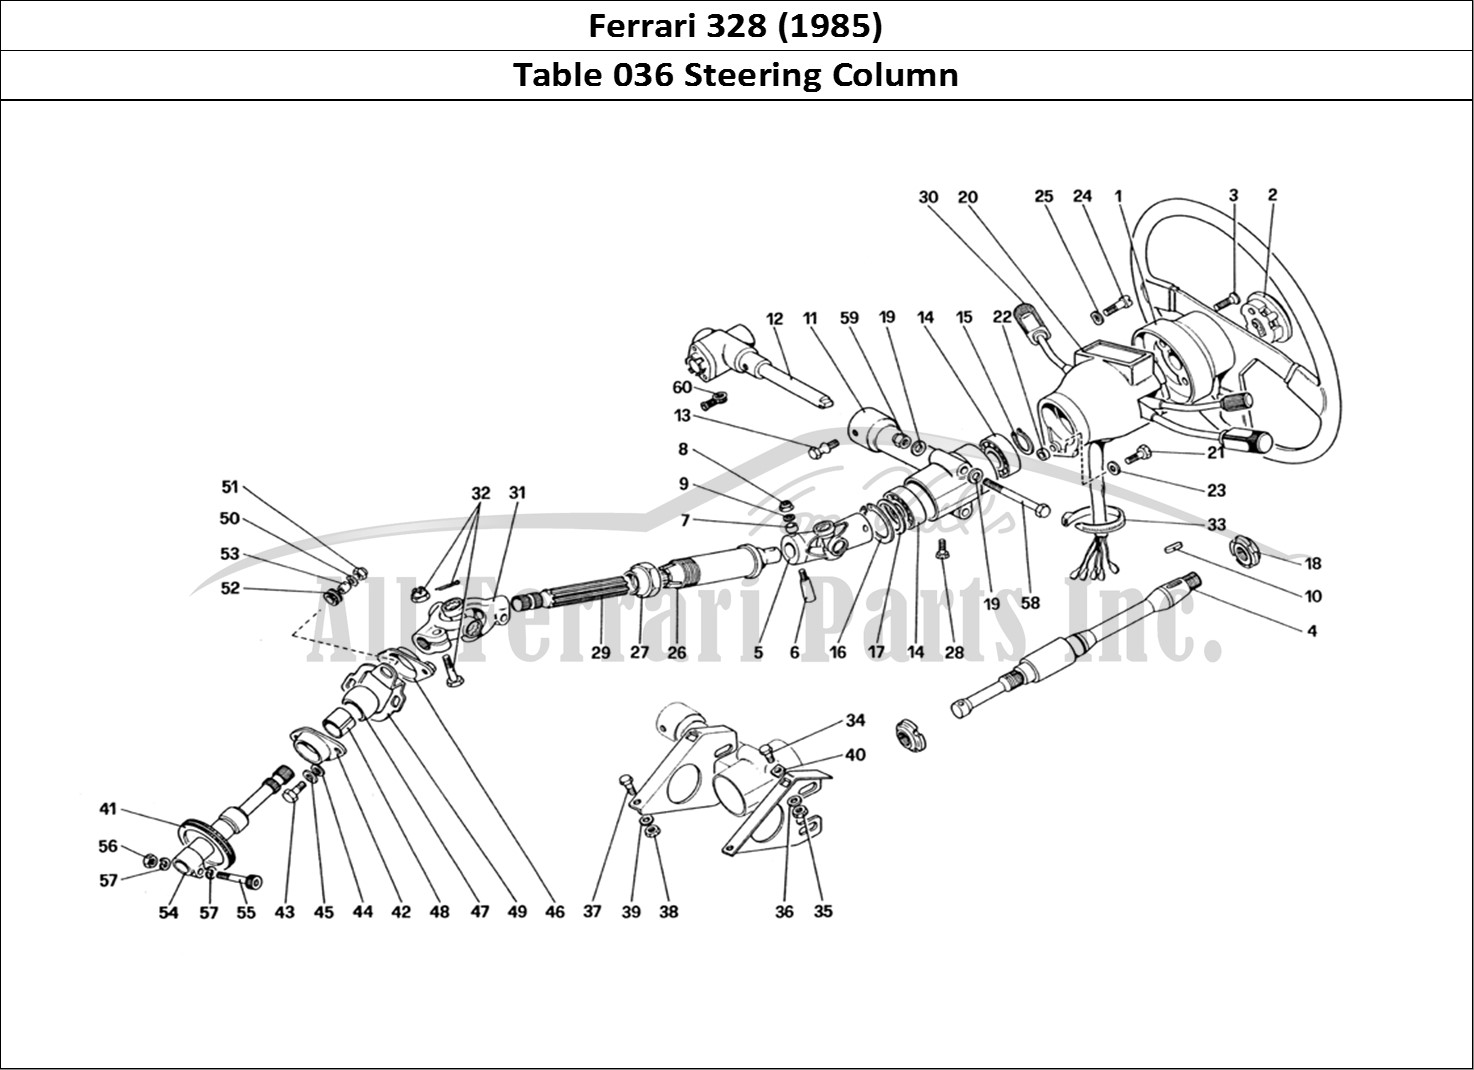 Ferrari Parts Ferrari 328 (1985) Page 036 Steering Column